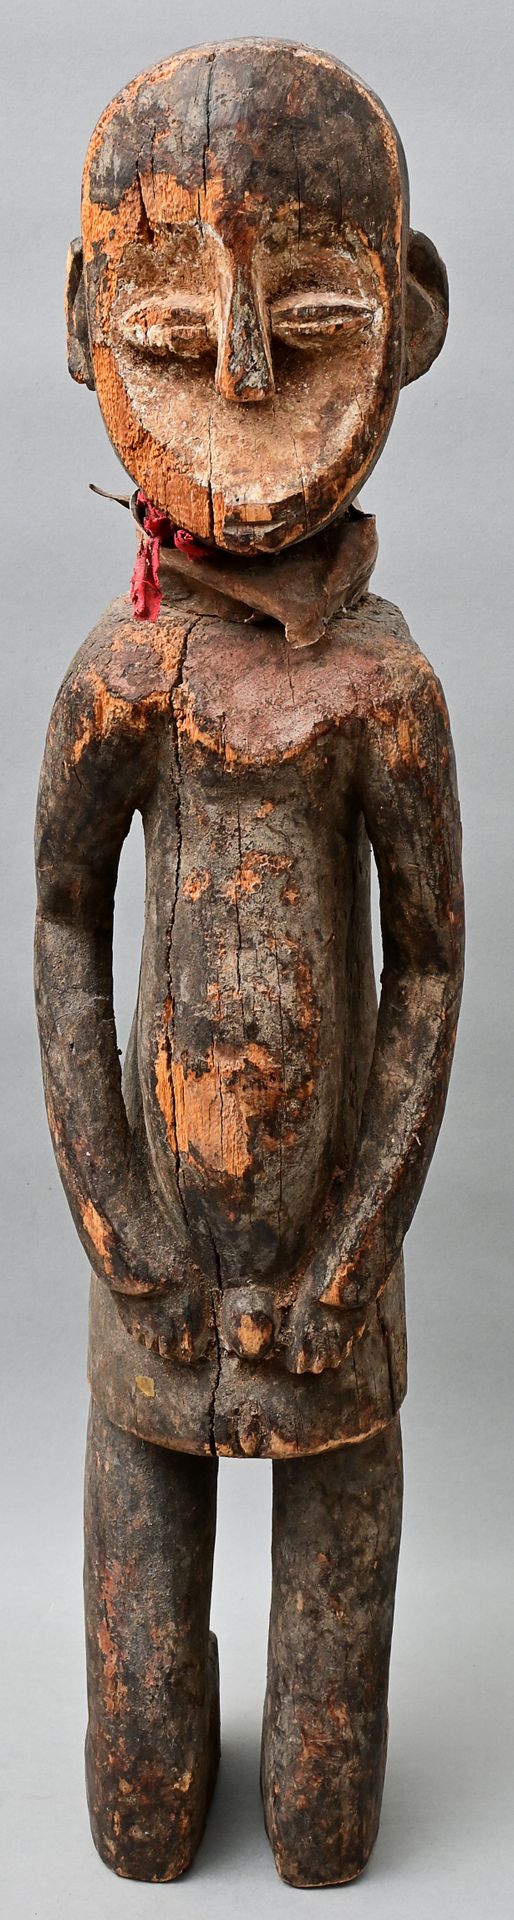 Null Figure Rega (Lega), D. R. Congo Male figure in kneeling posture, wood, carv&hellip;